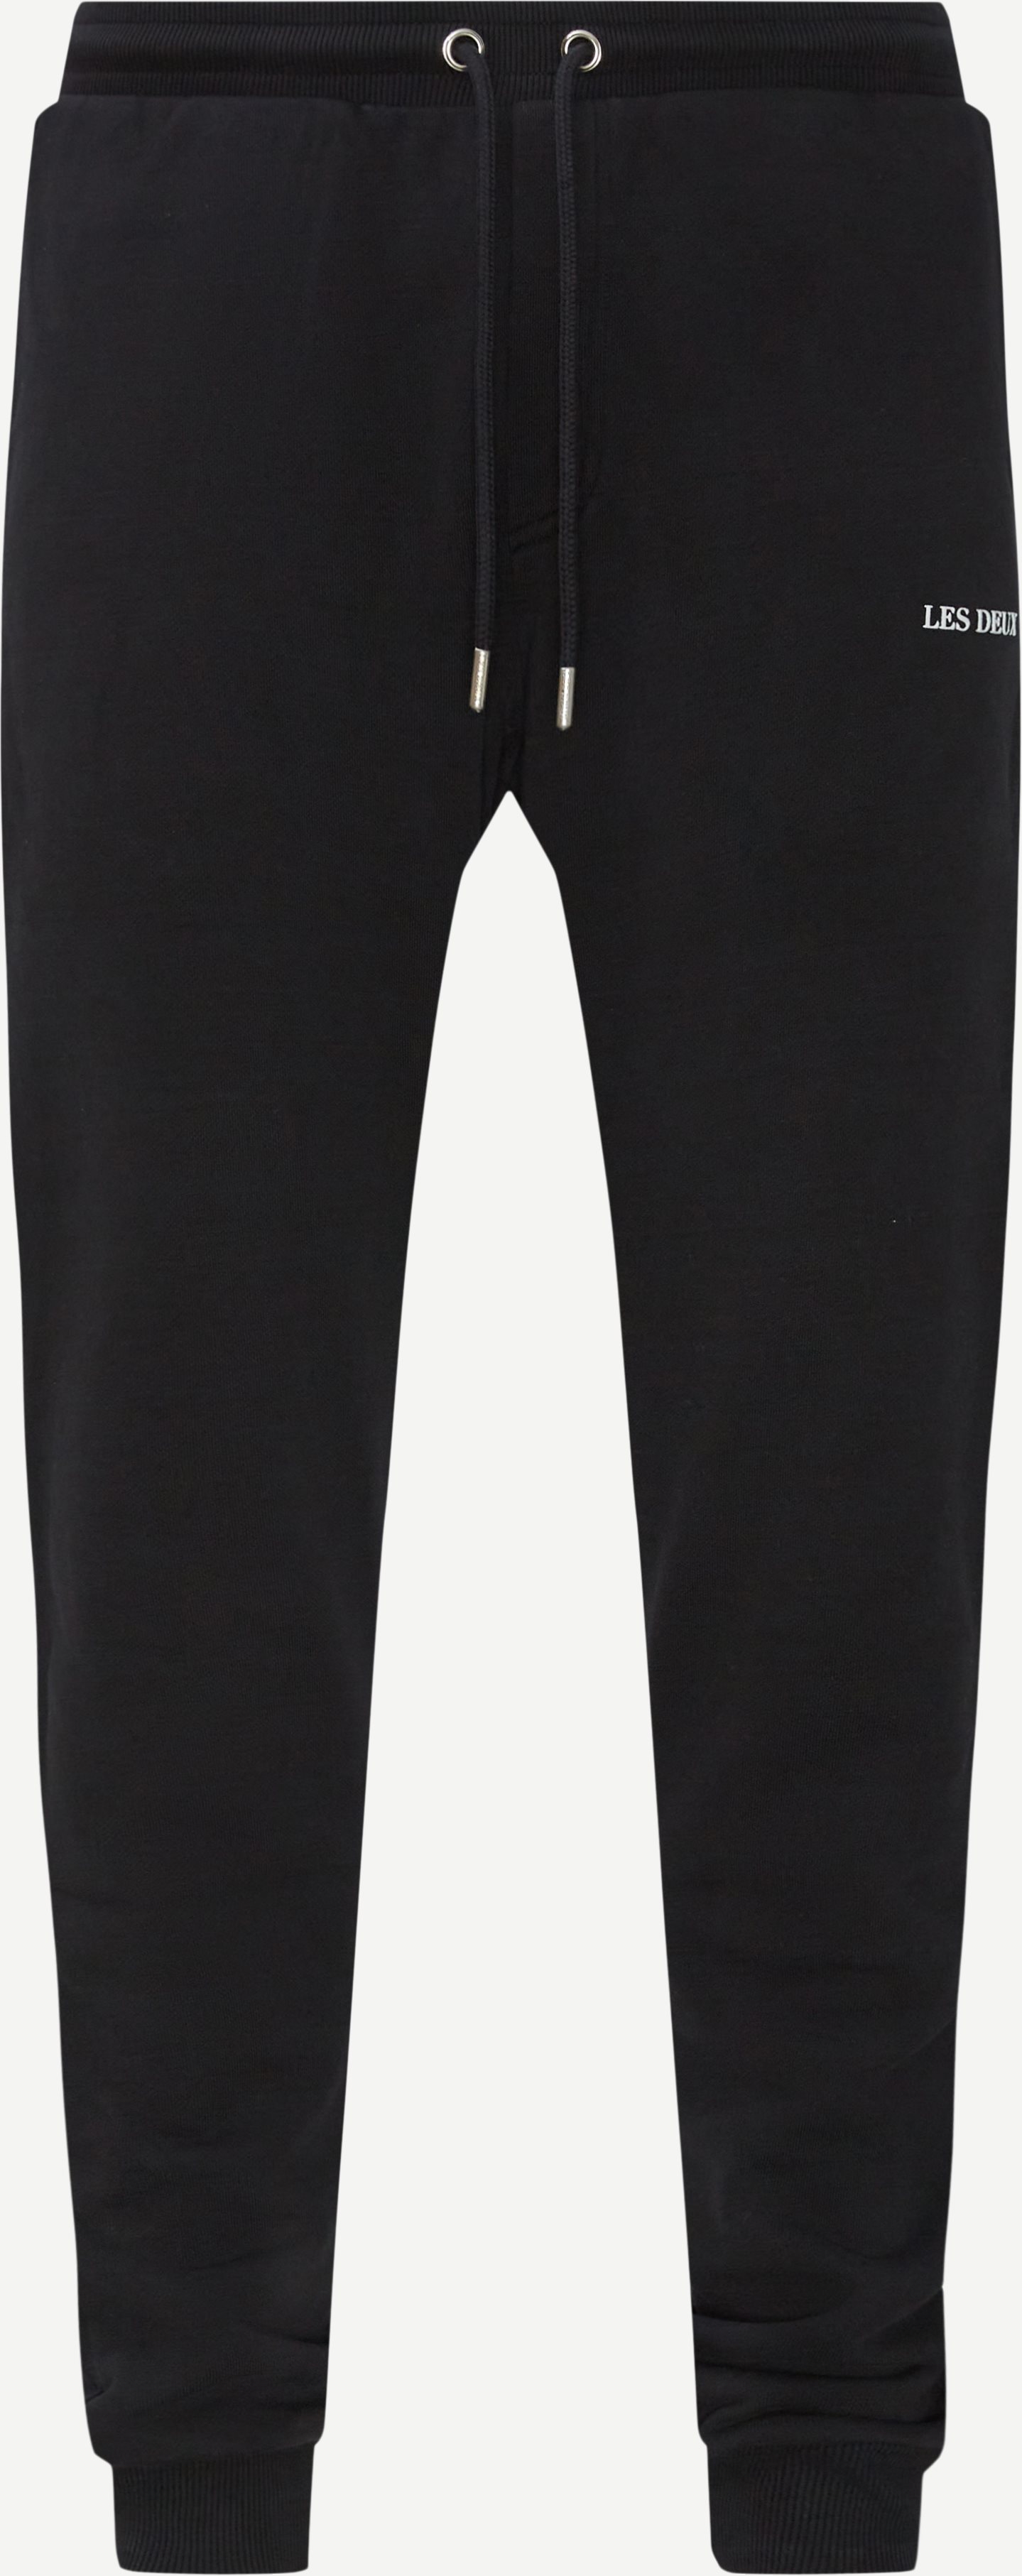 Lens Sweatpants - Trousers - Slim fit - Black